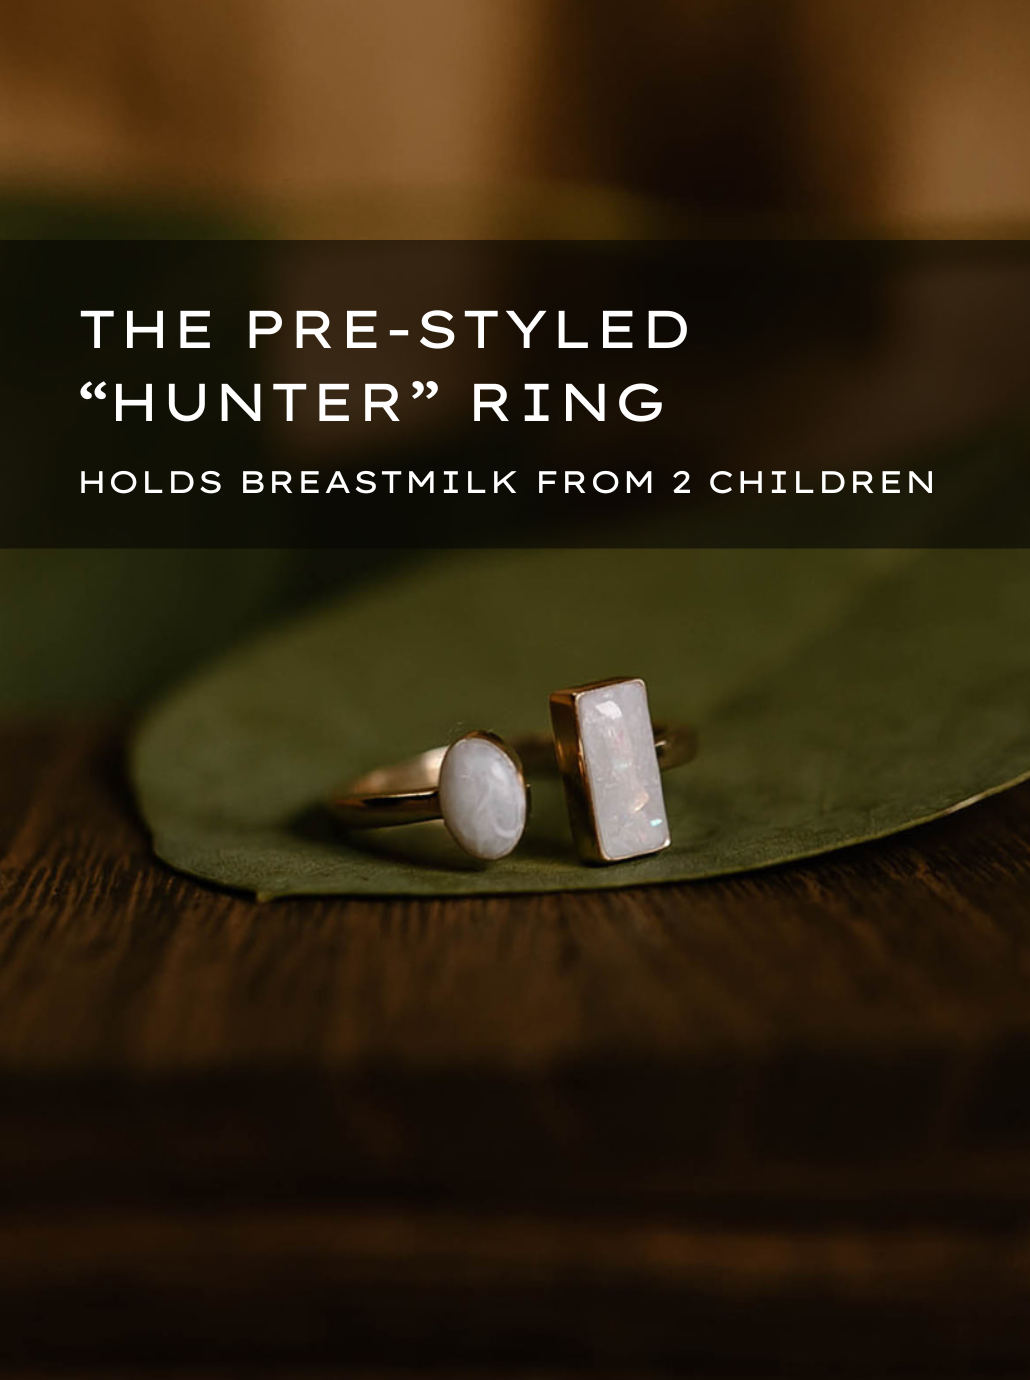 The HUNTER Ring